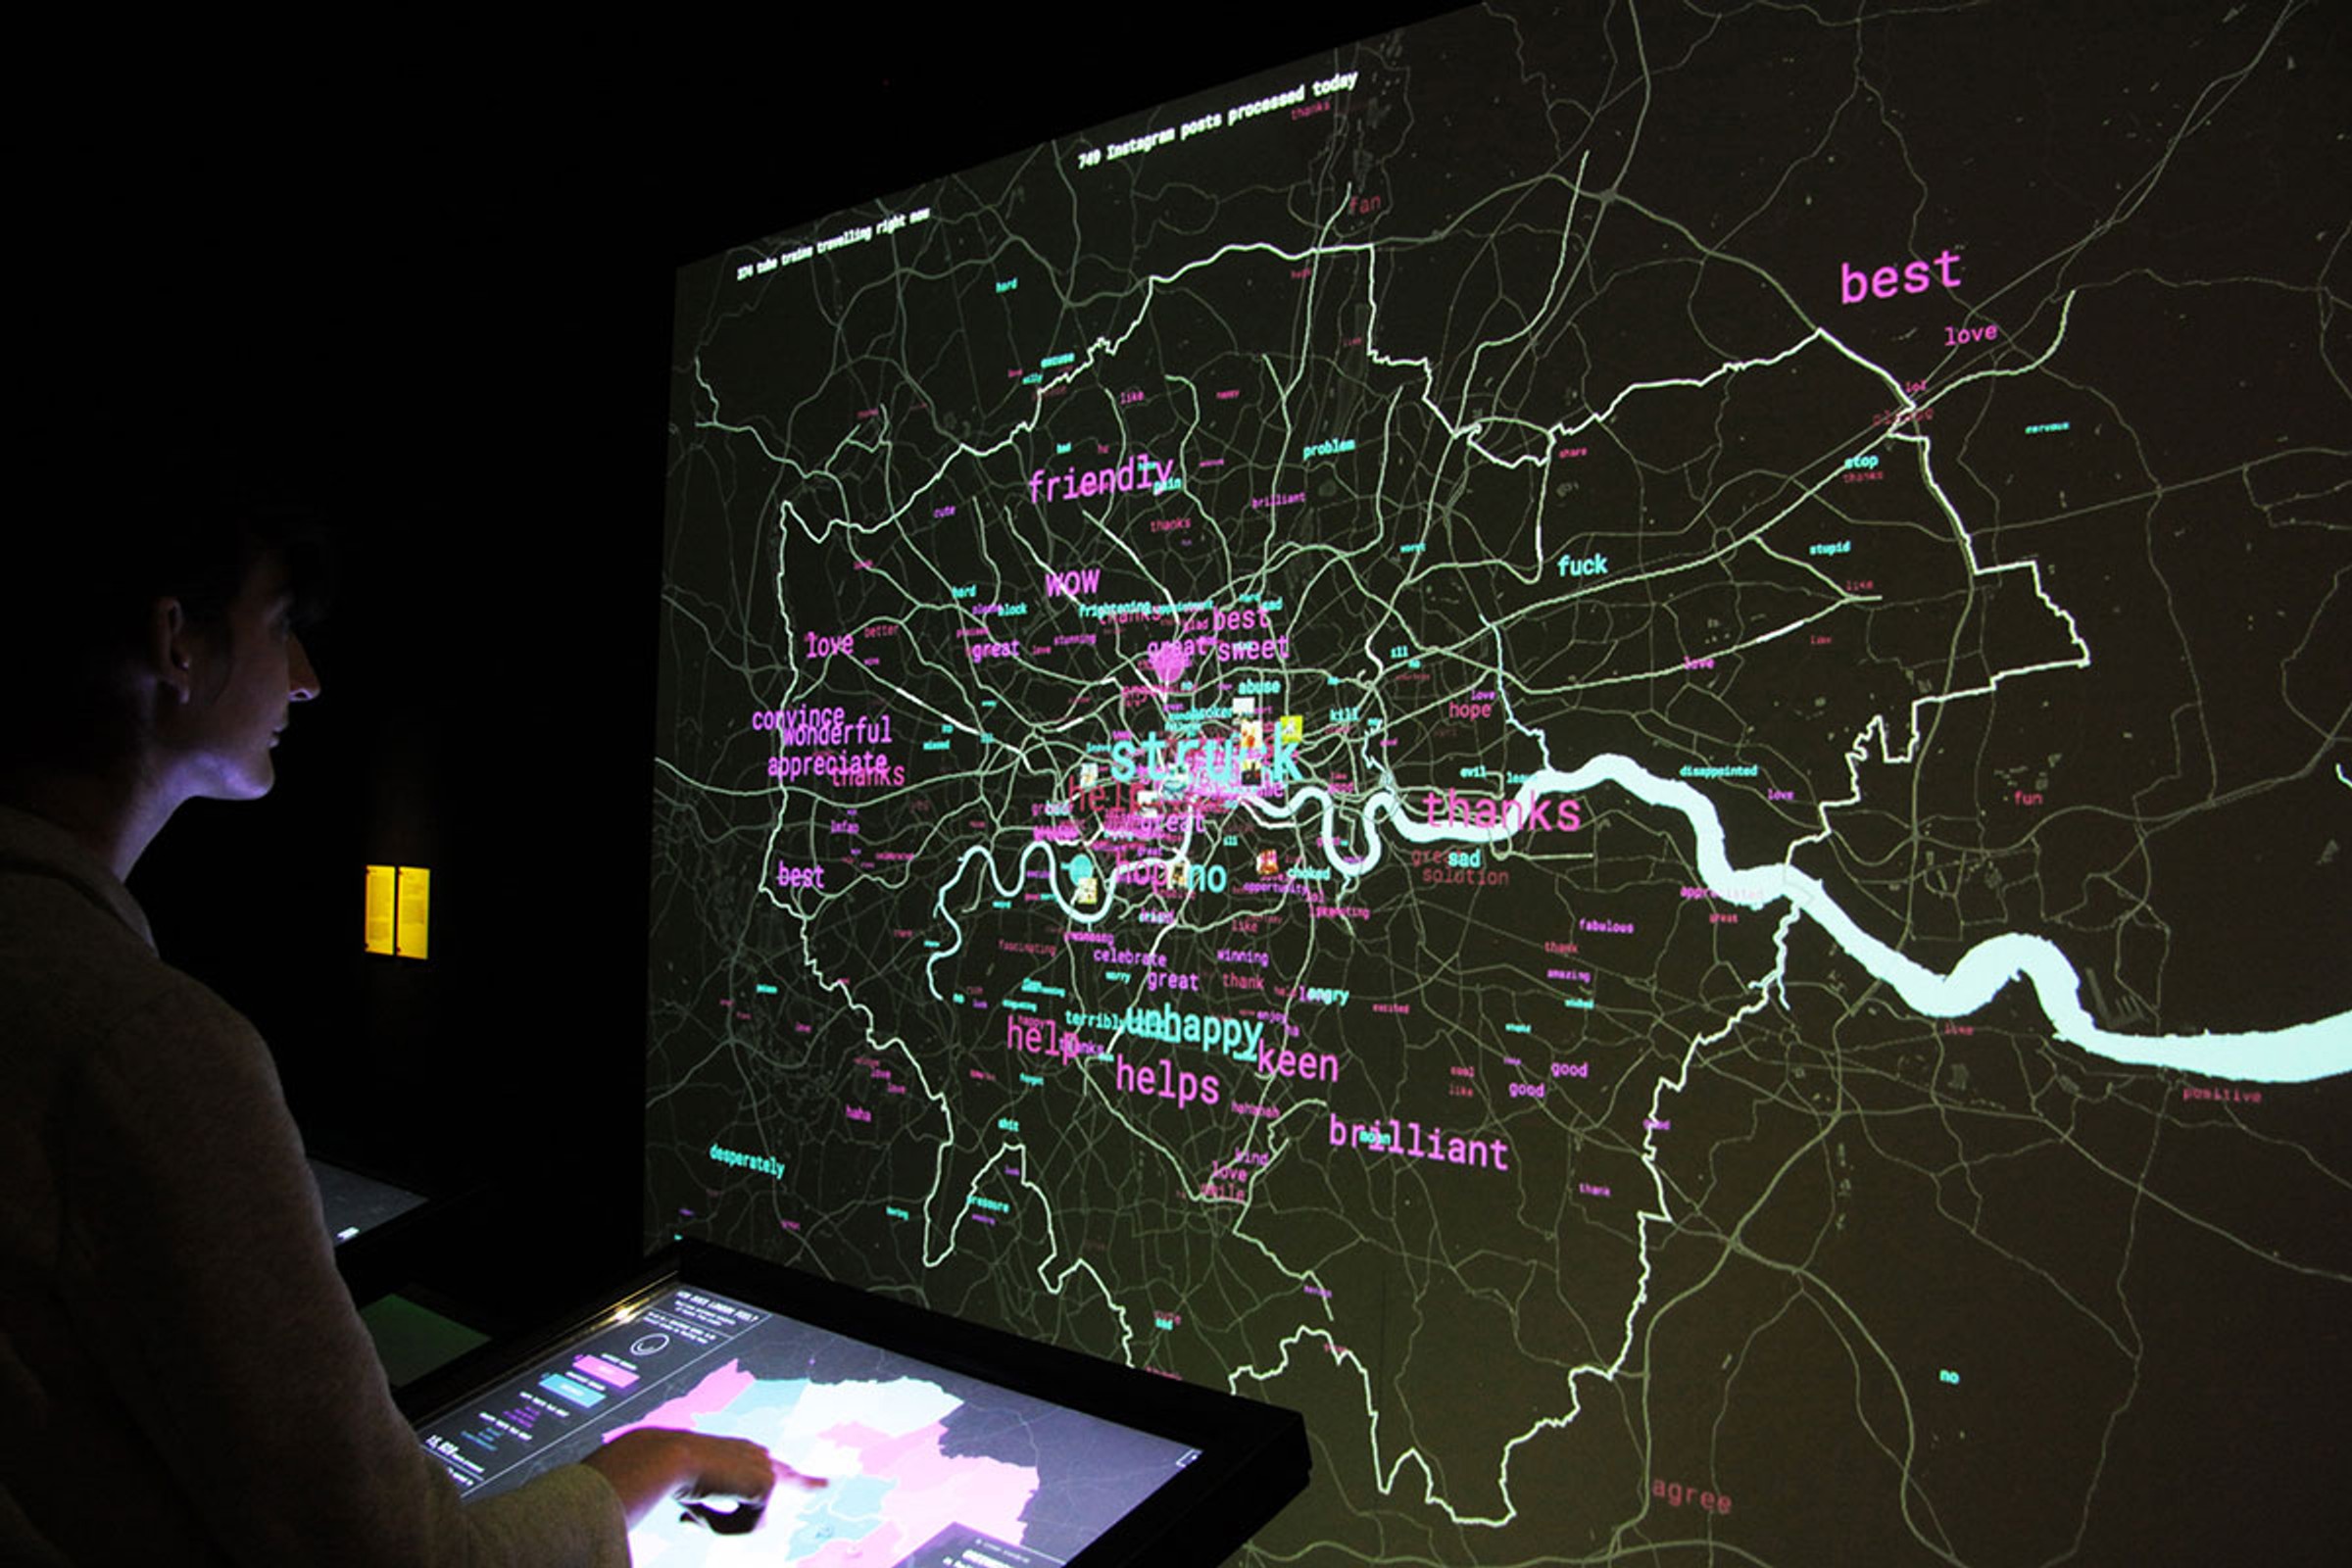 London Data Streams